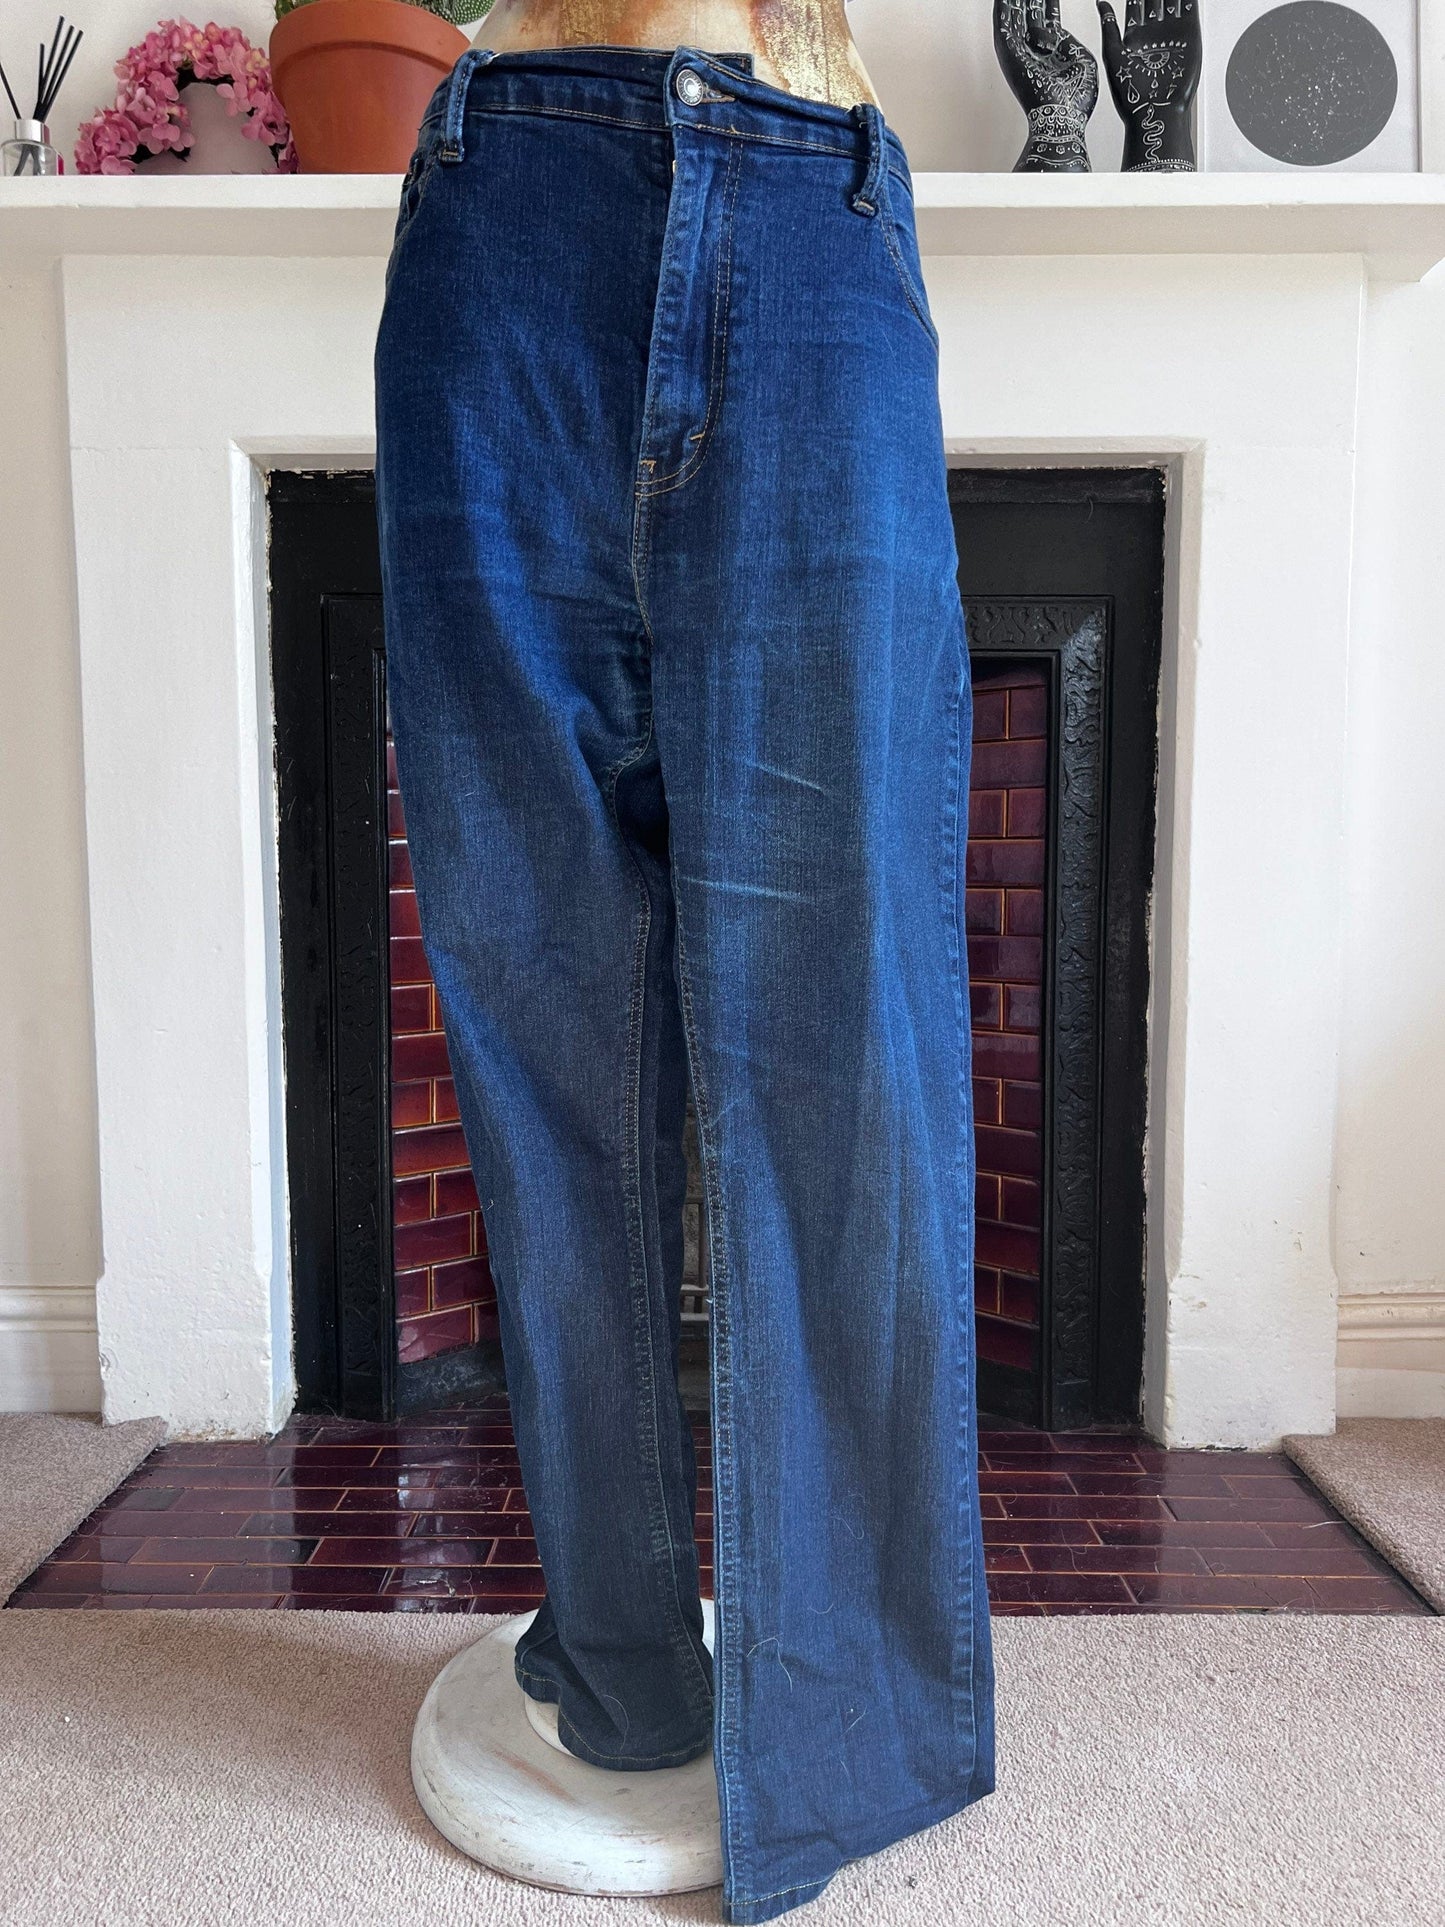 Vintage Levi Jeans Dark stretch Jeans 511 Fit - dark wash denim jeans  - Levi Jeans 511 W42 L34